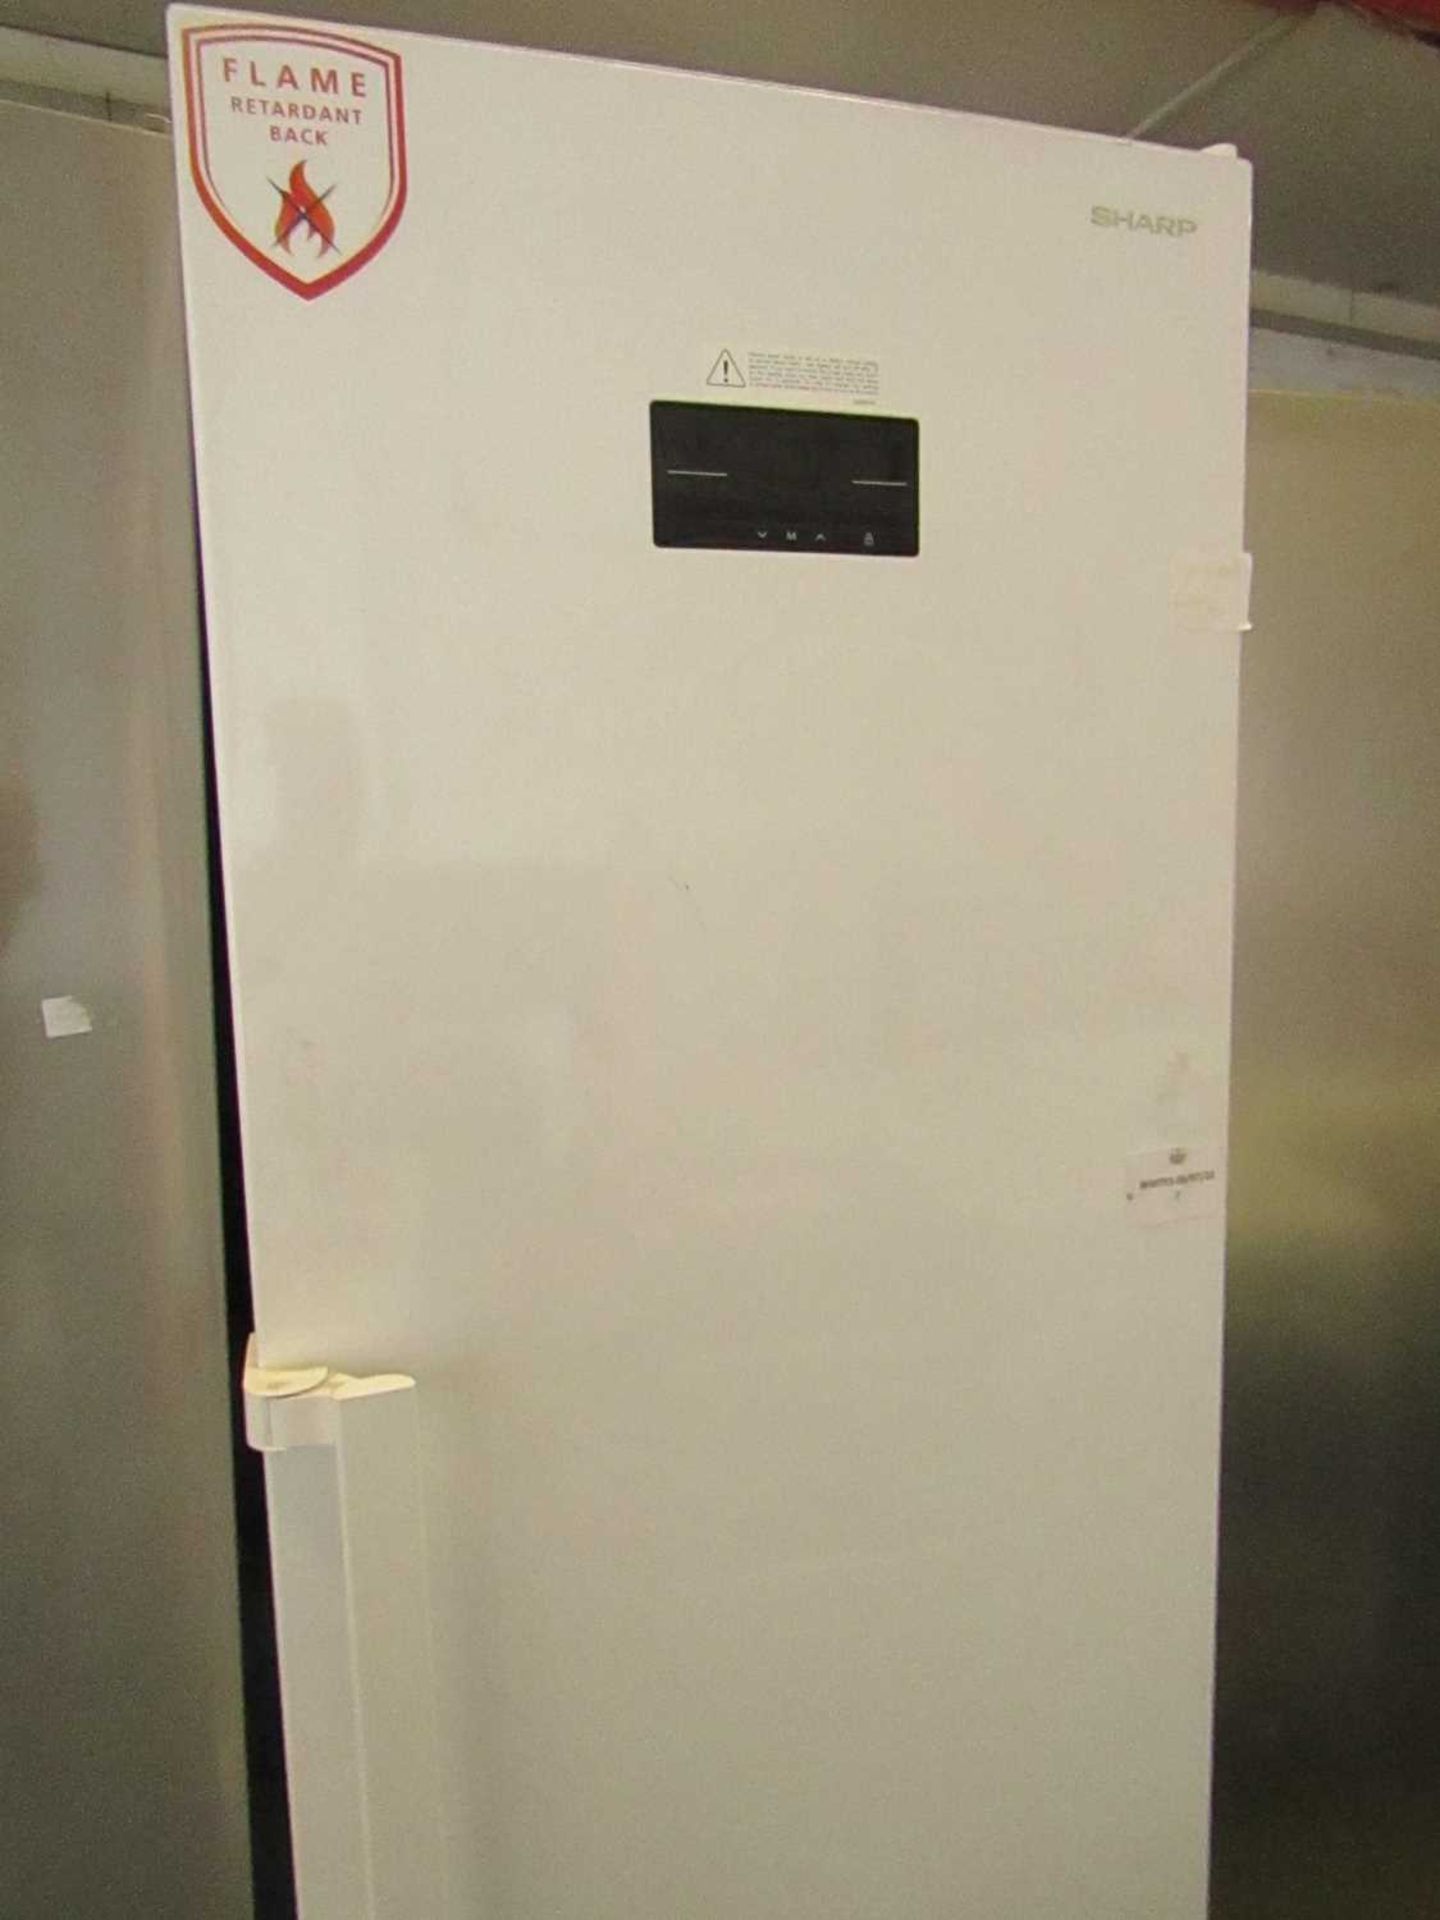 VAT Sharp - Tall White Freestanding fridge - Unable To Test Due To Damaged Plug.